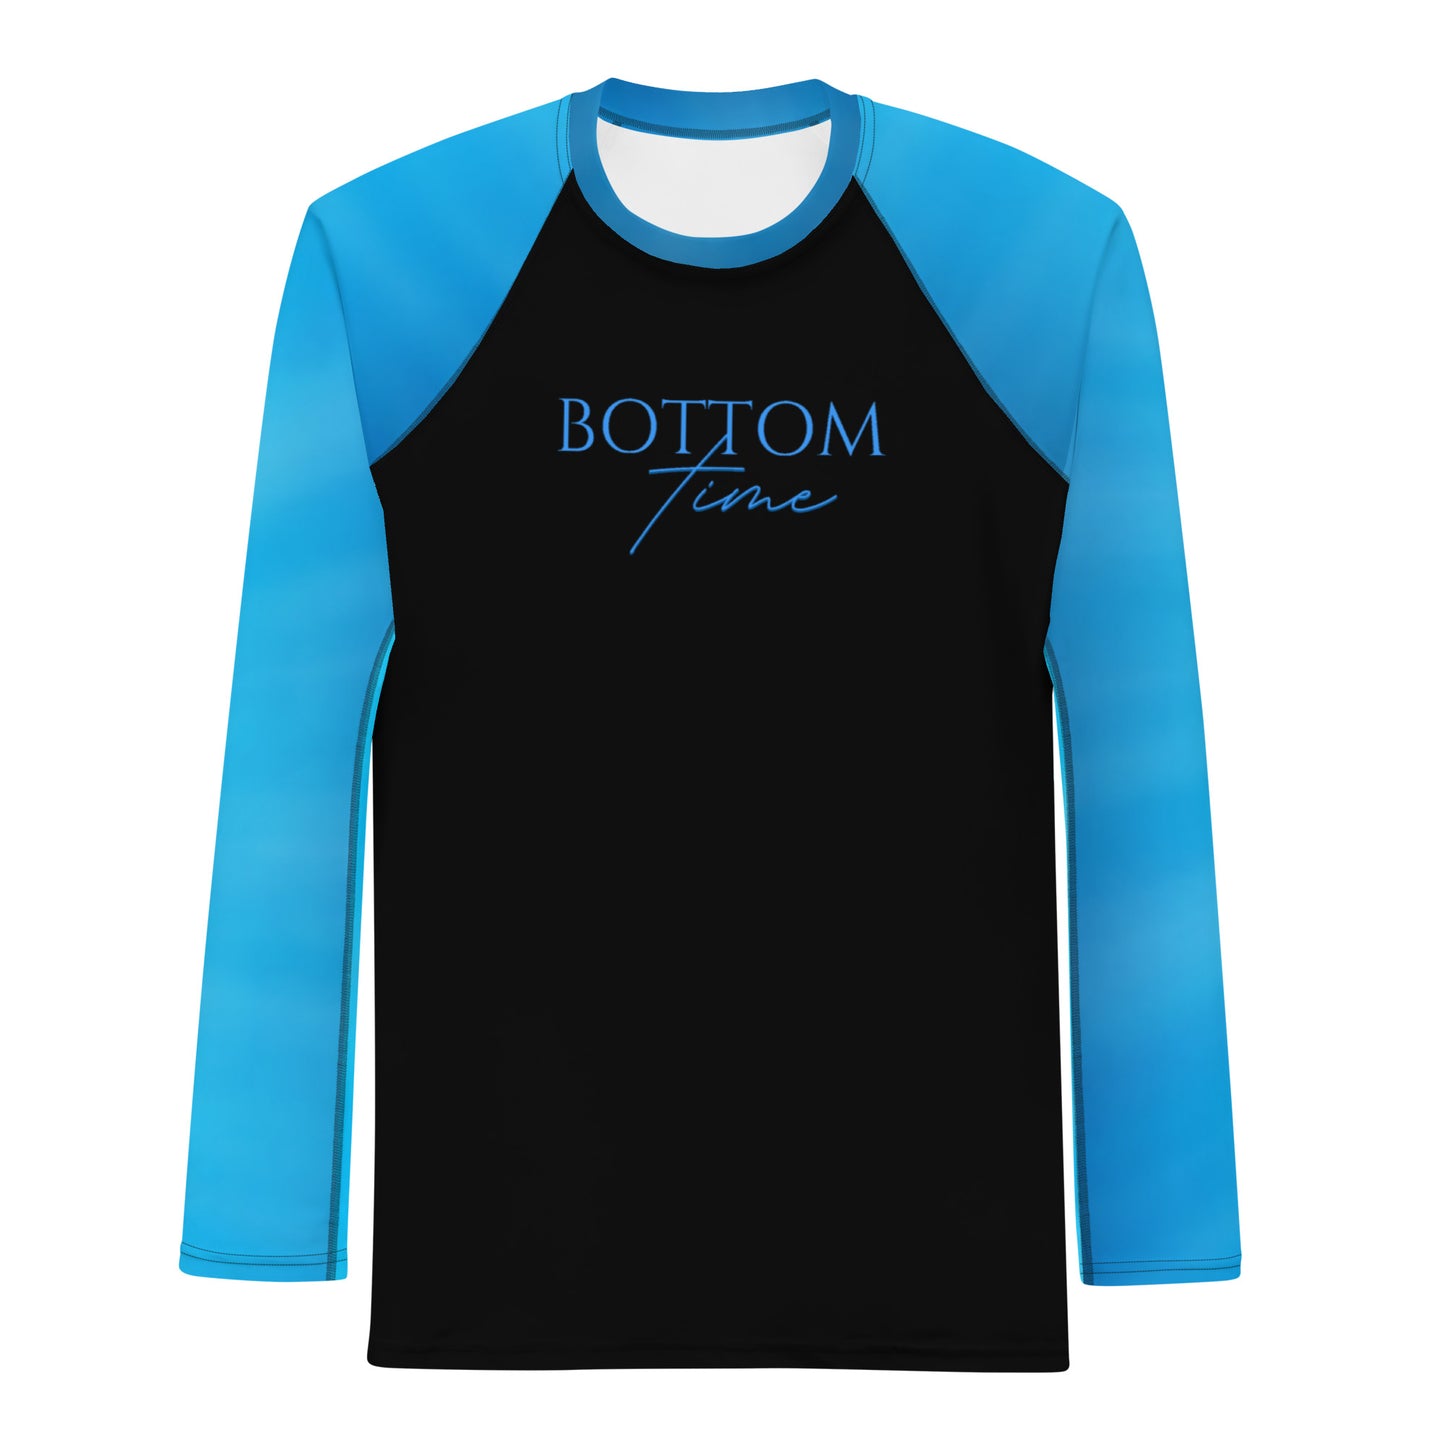 Bottom Time™ Eco-Friendly Men's Rash Guard, Bubbles, Sets, Blue